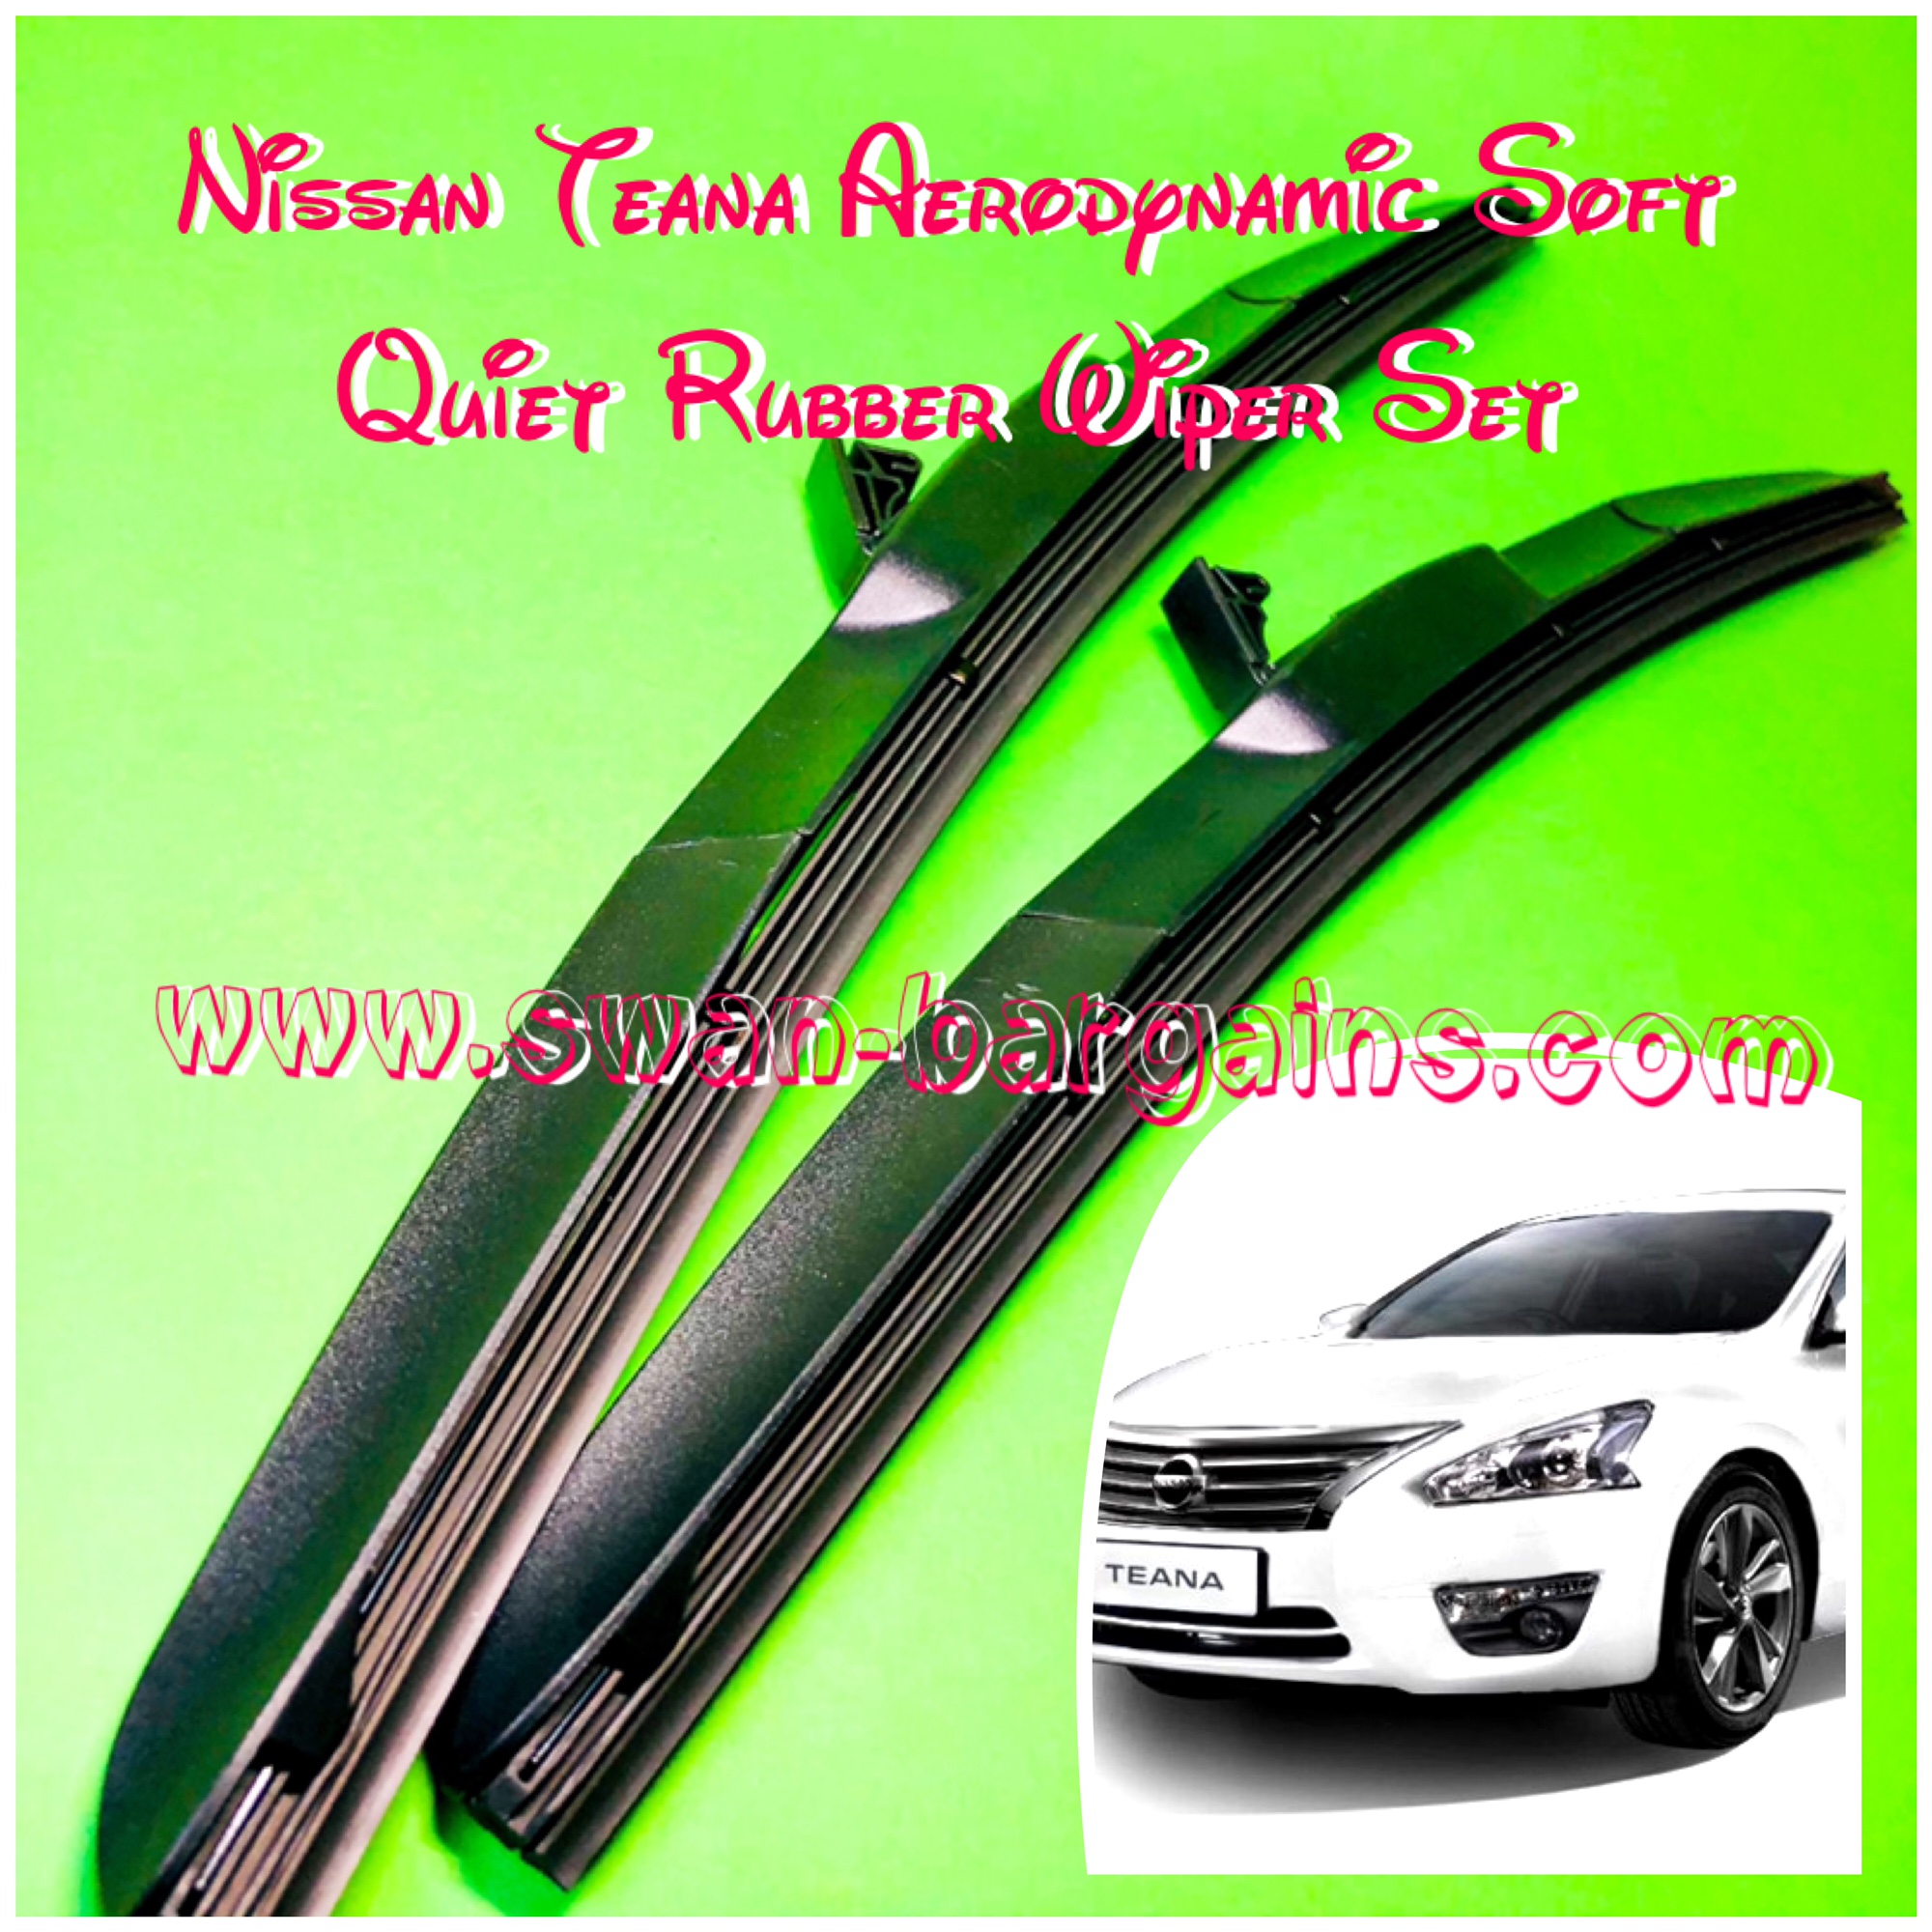 2pcs Nissan Teana Aerodynamic Quiet Wiper Blades Set Singapore